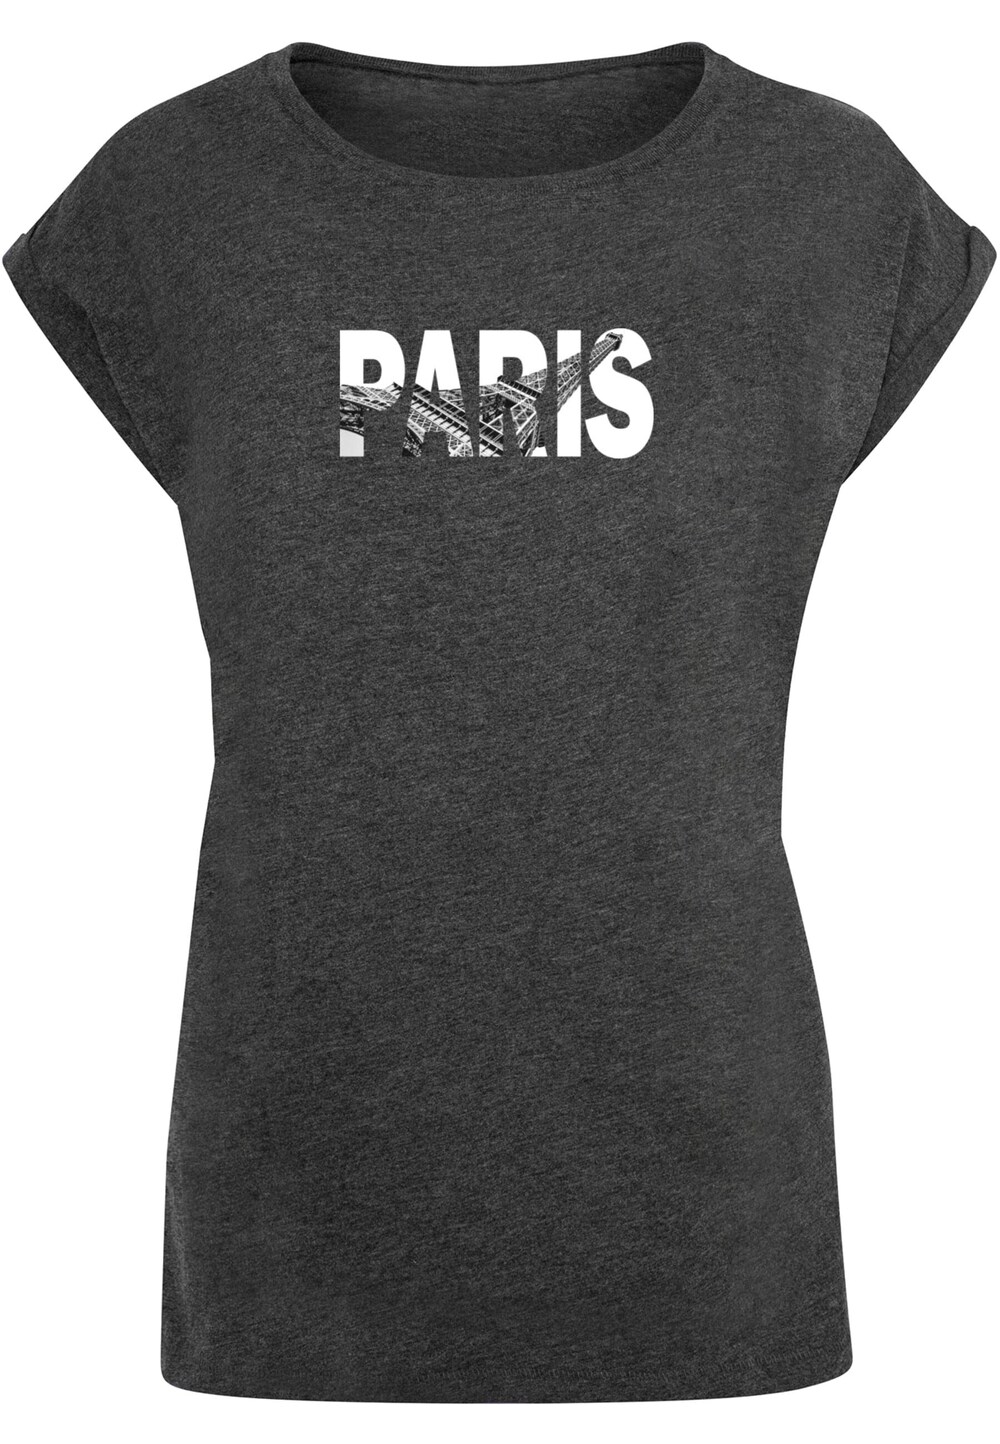 Рубашка Merchcode Paris Eiffel Tower, антрацит